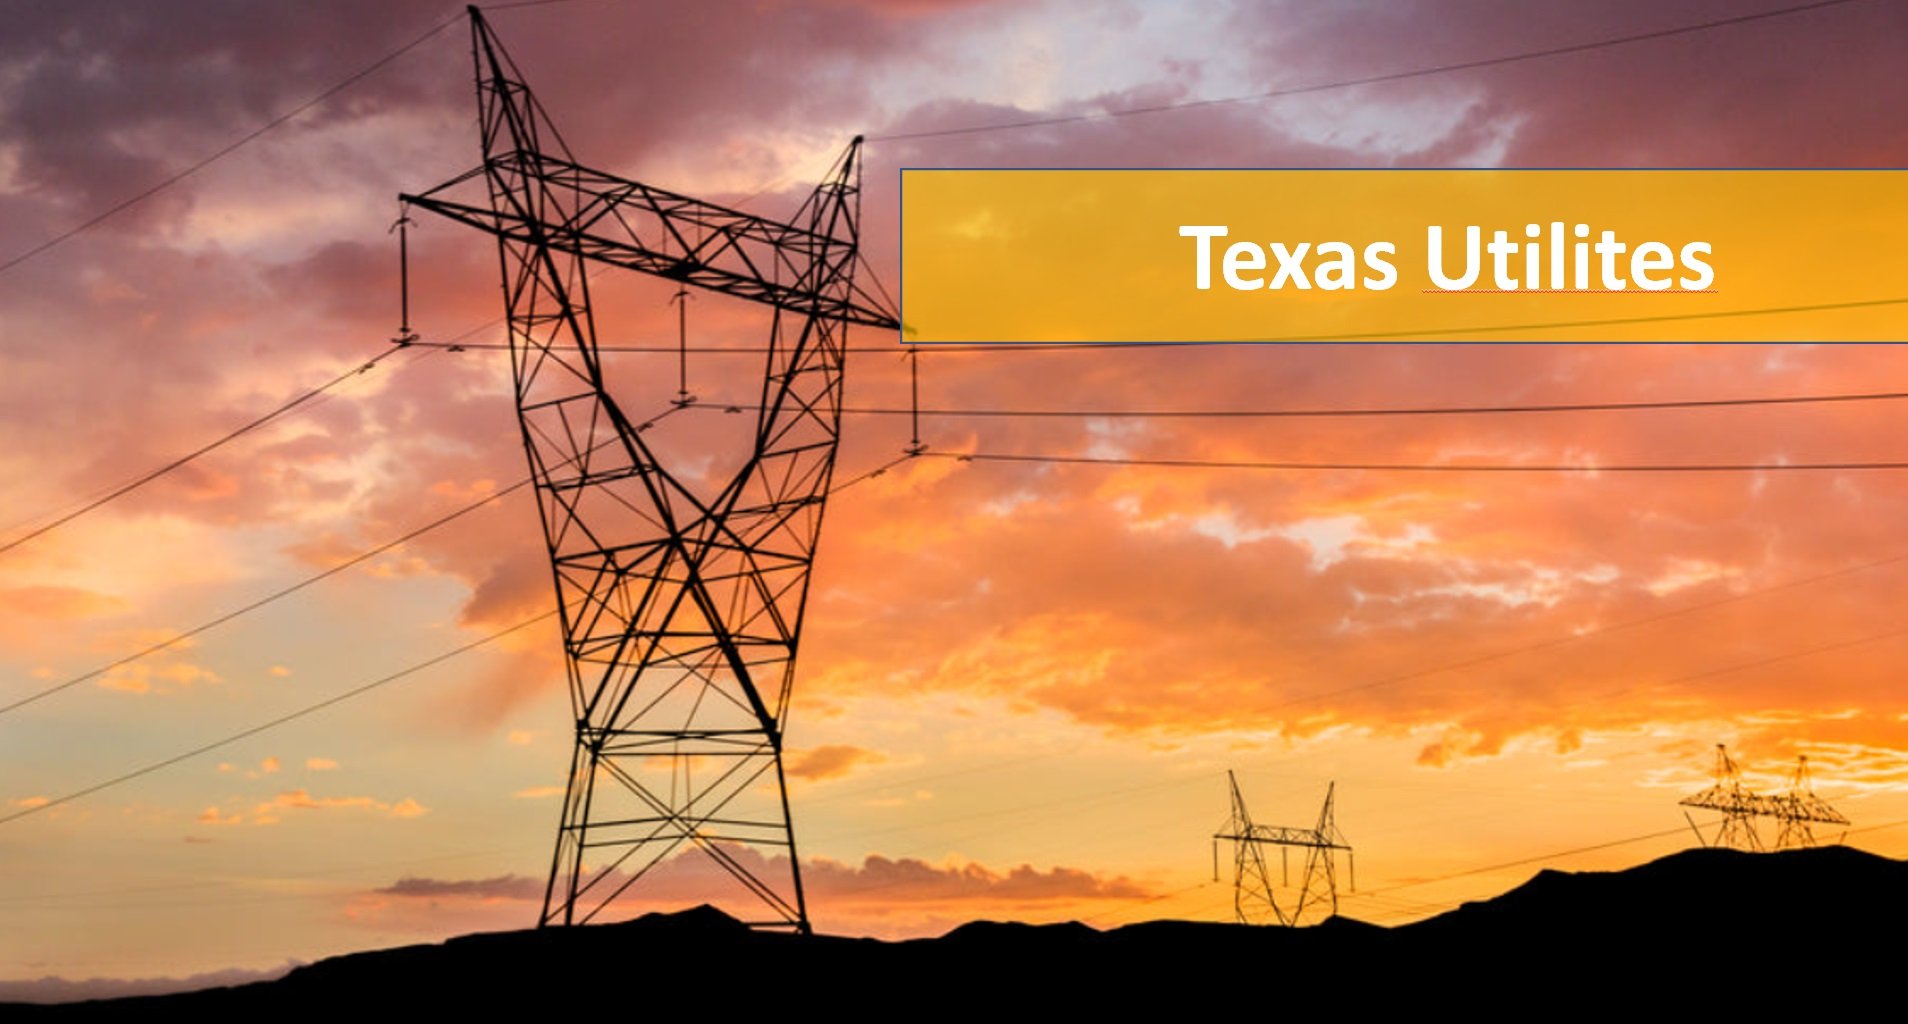 Texas utilities